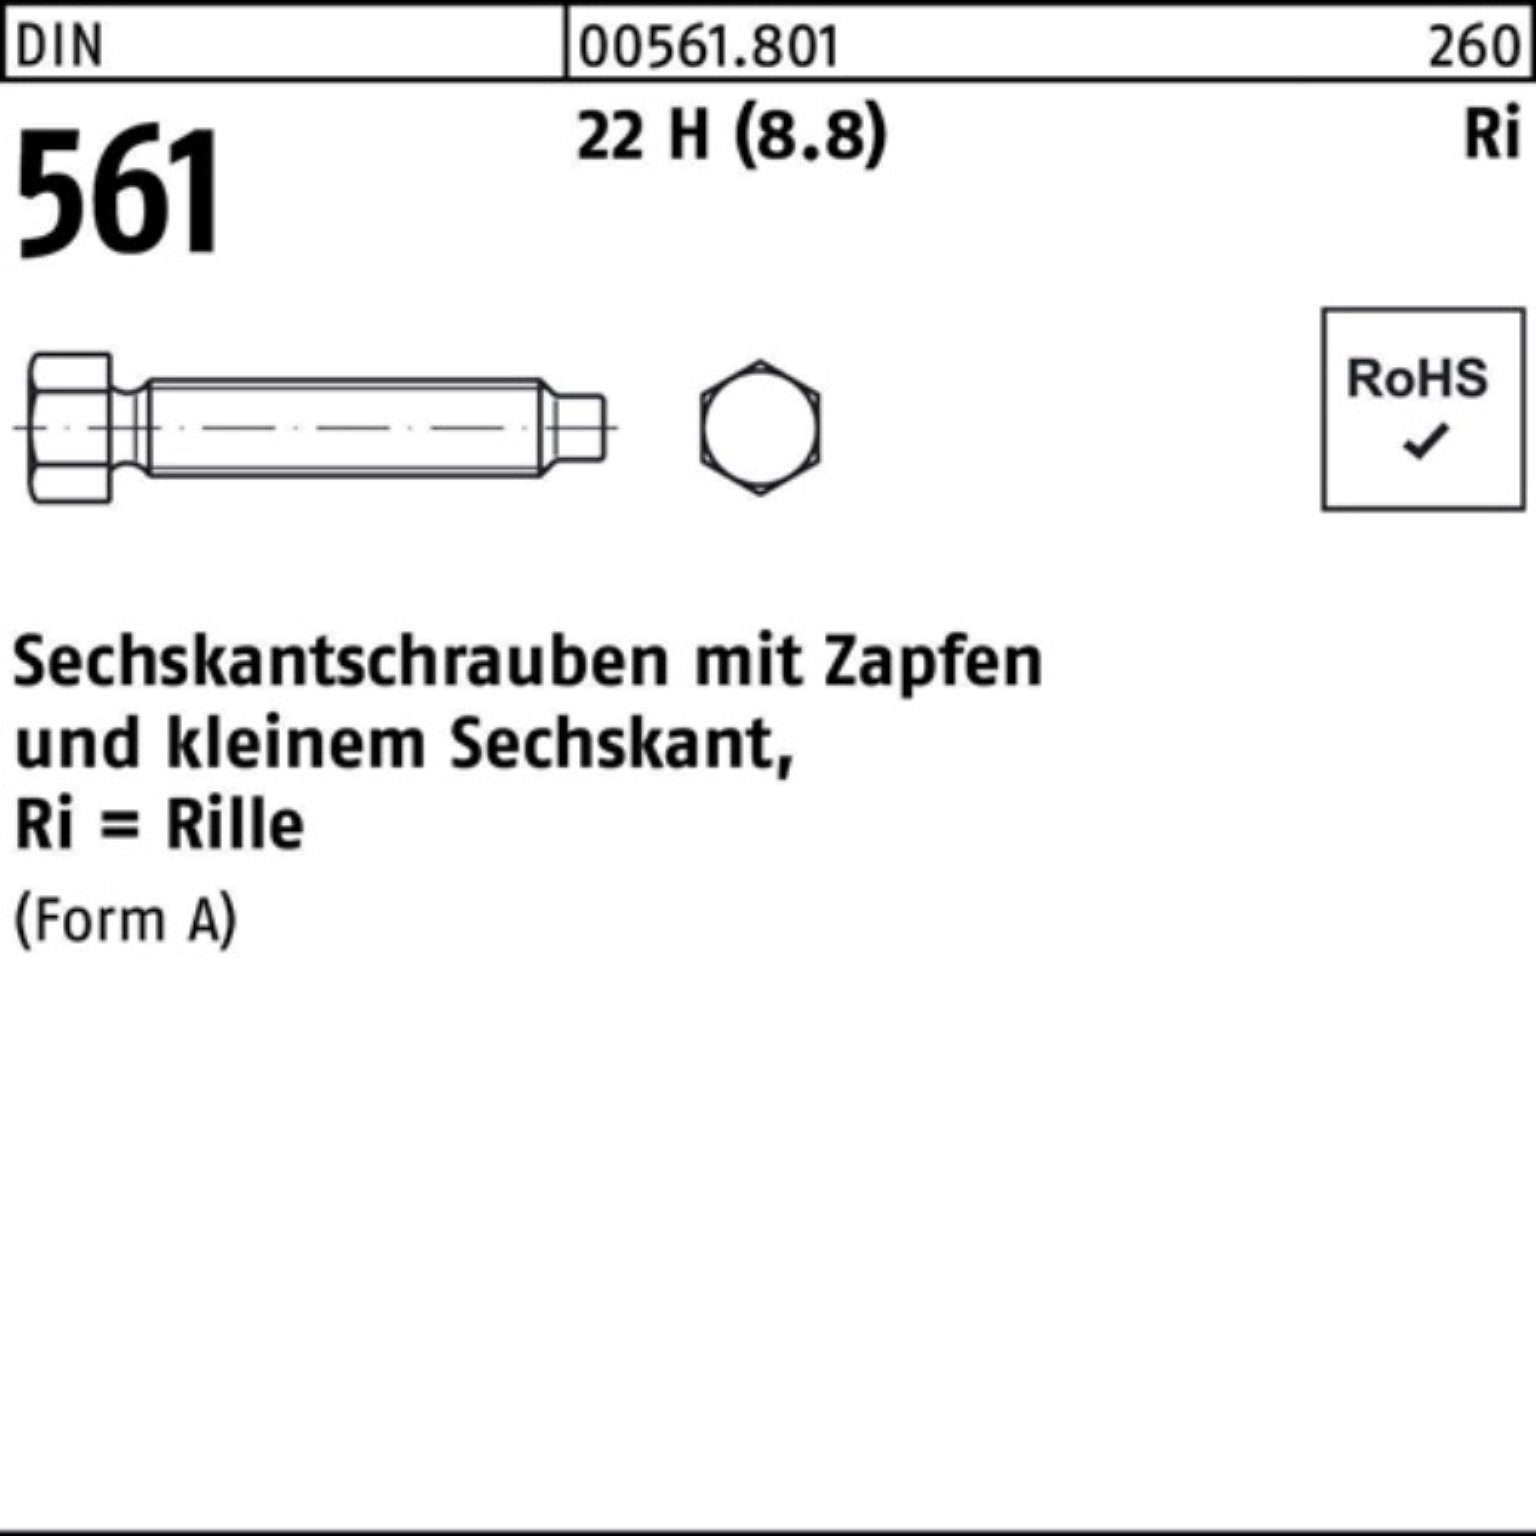 Reyher Sechskantschraube 100er Pack Sechskantschraube DIN 561 Zapfen AM 12x 45 22 H (8.8) 25 St